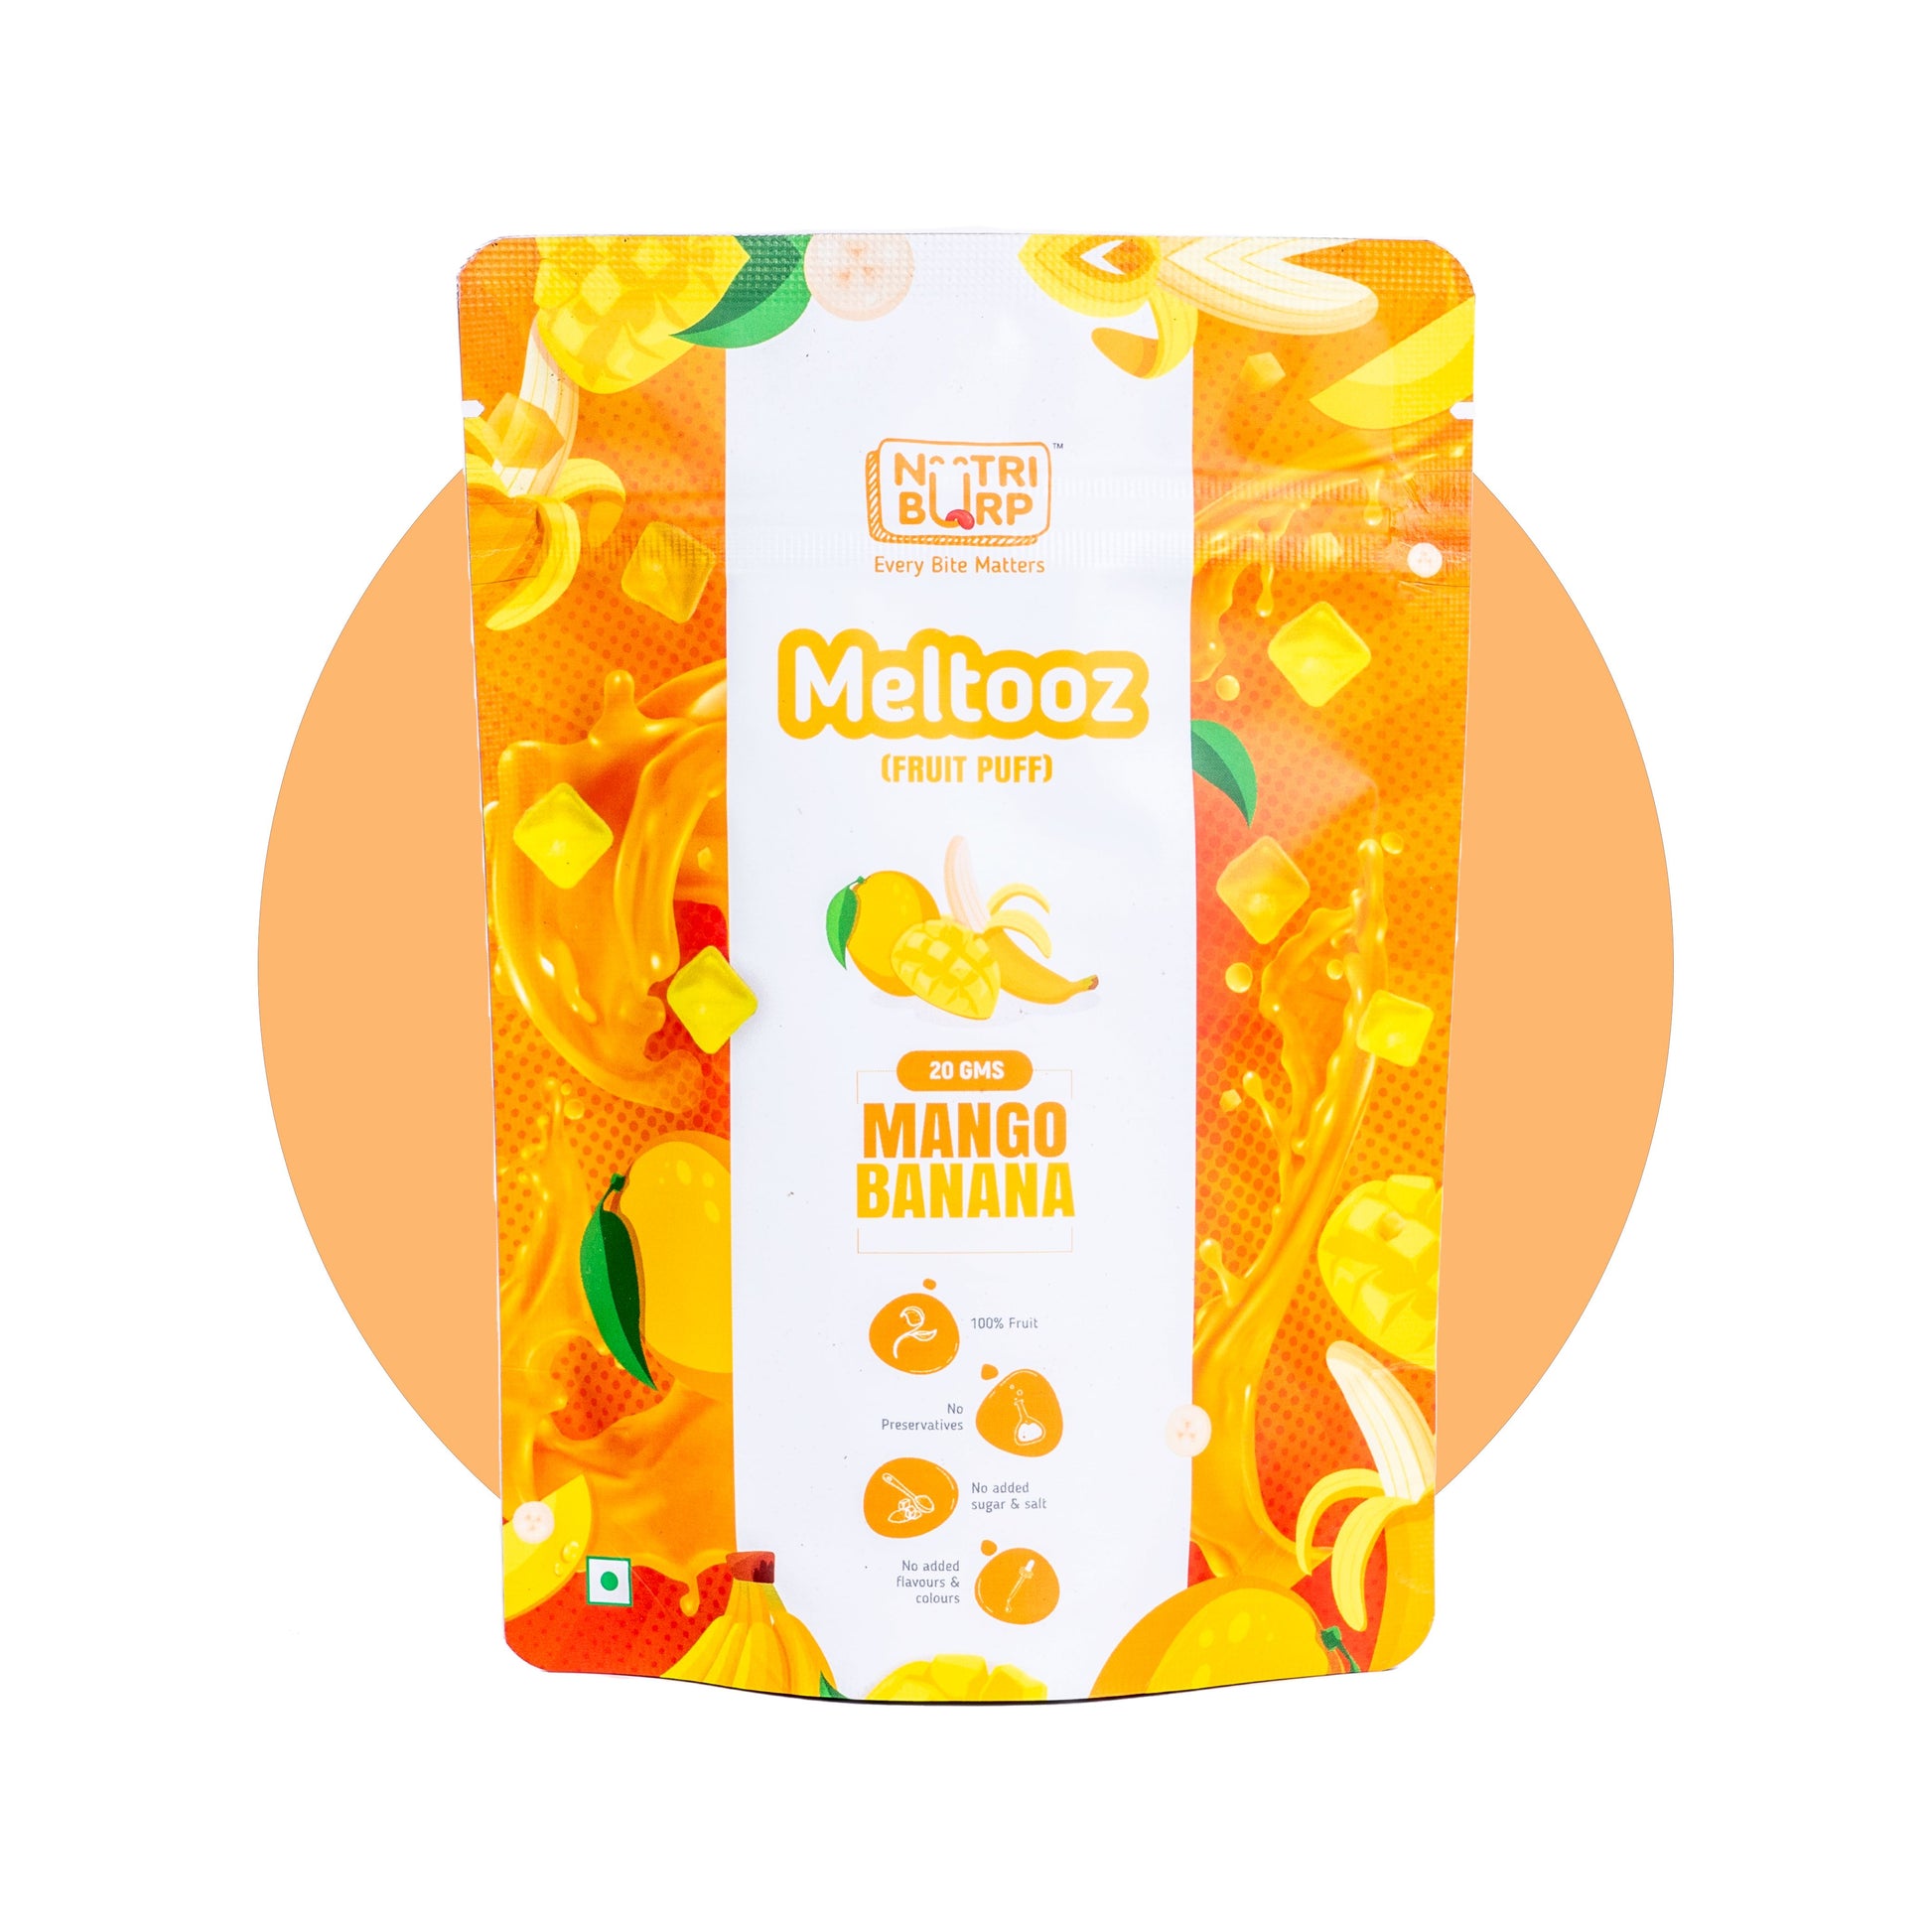 Mango Banana Meltooz (20g each) - Ideal for 9 Months+ Baby & Toddler Food nutriburp Pack of 1 